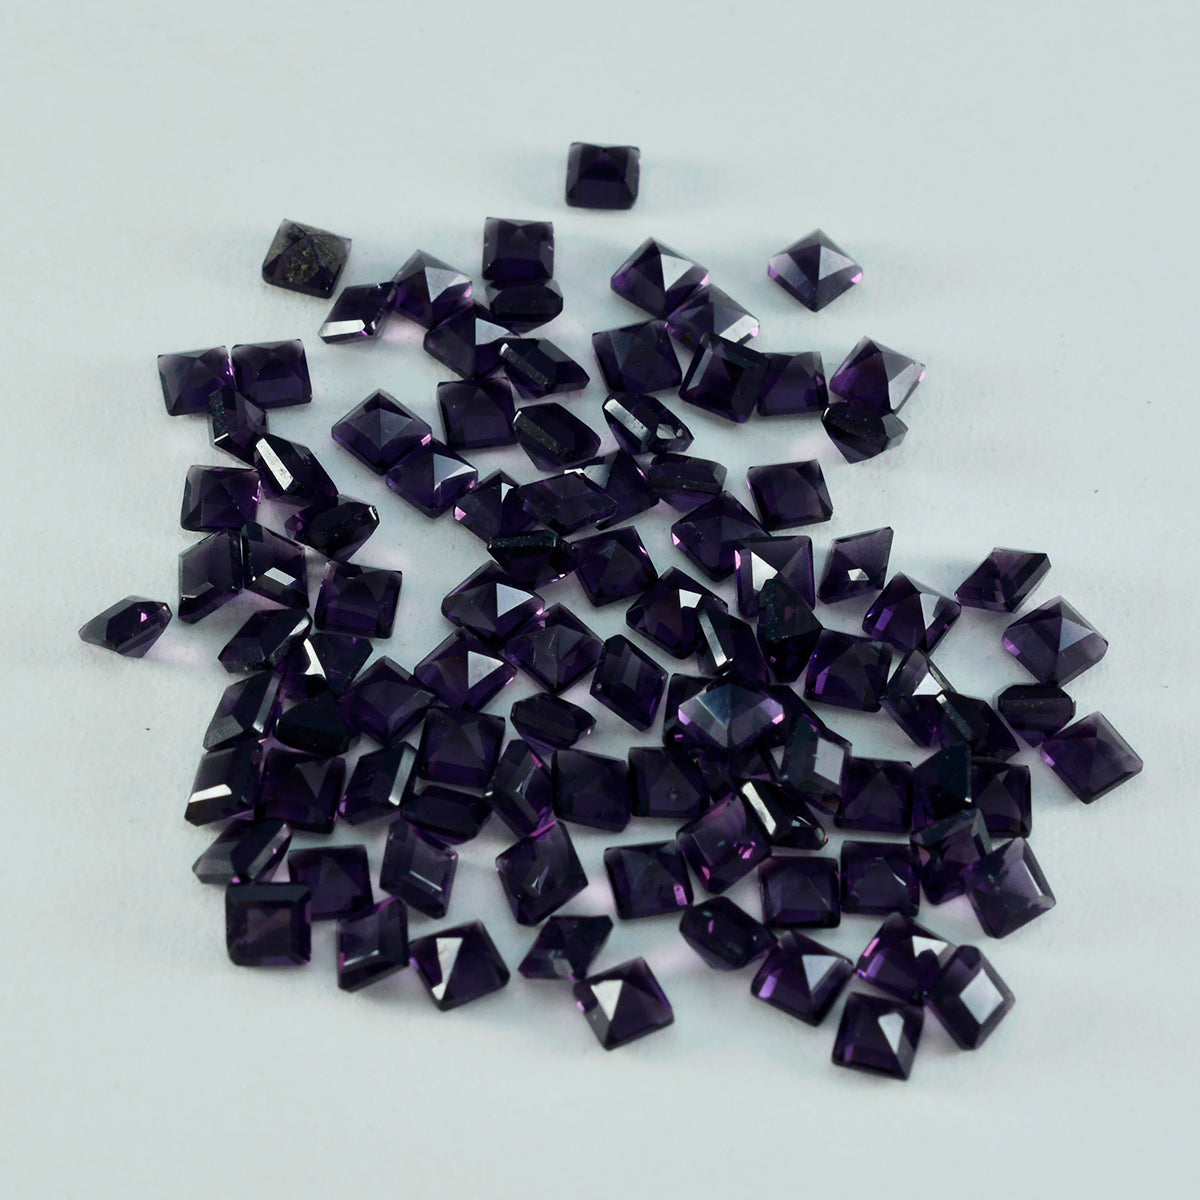 Riyogems 1PC Purple Amethyst CZ Faceted 3x3 mm Square Shape fantastic Quality Loose Stone